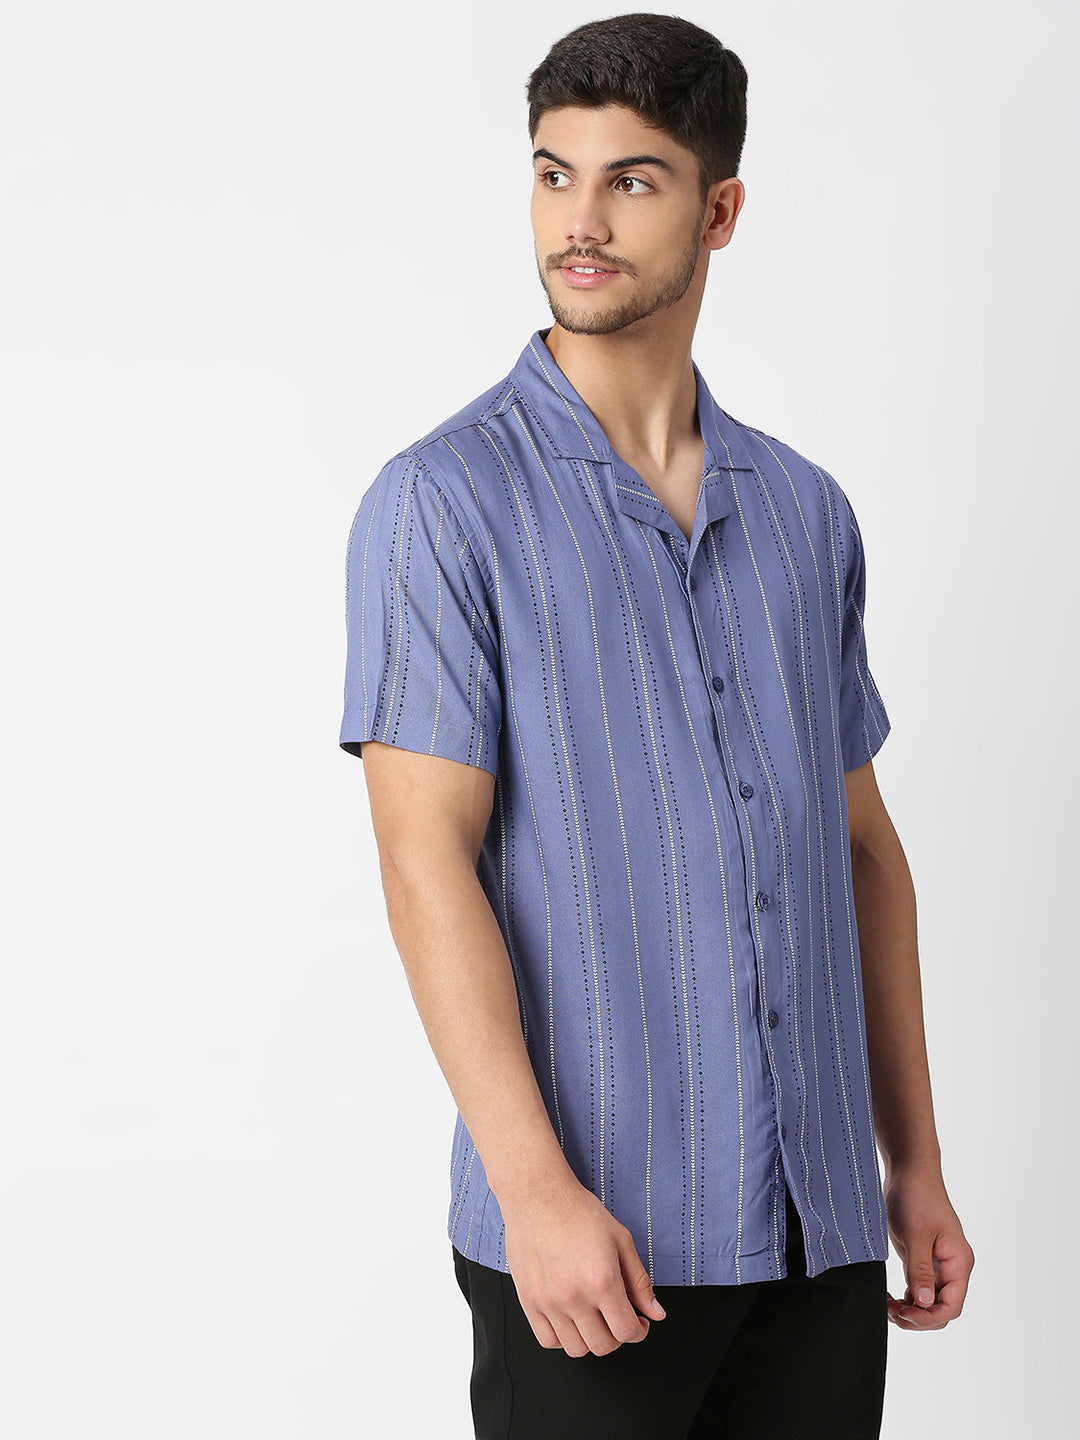 Morocco Chambray Blue Vertical Stripes Shirt